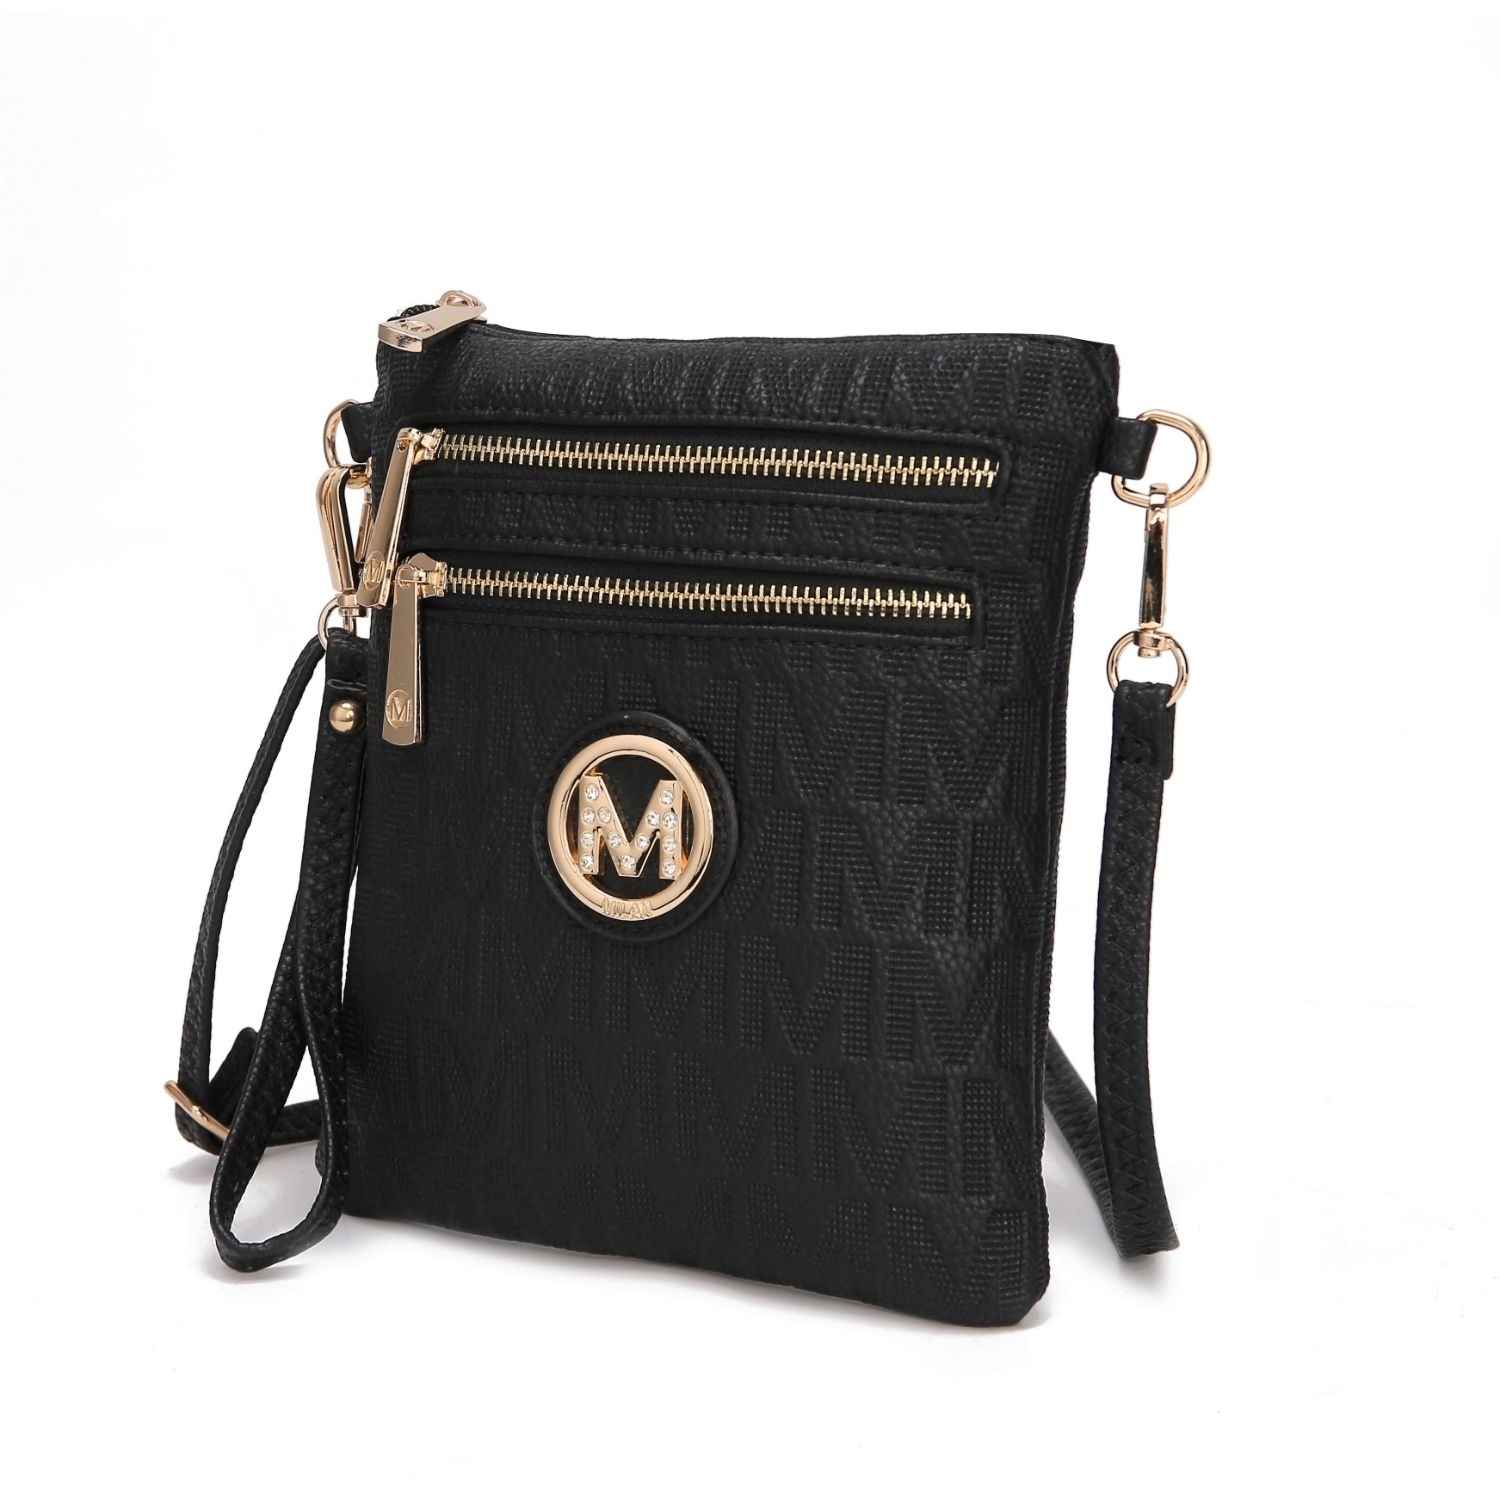 MKF Collection Andrea Milan M Signature Crossbody Handbag By Mia K - Mustard